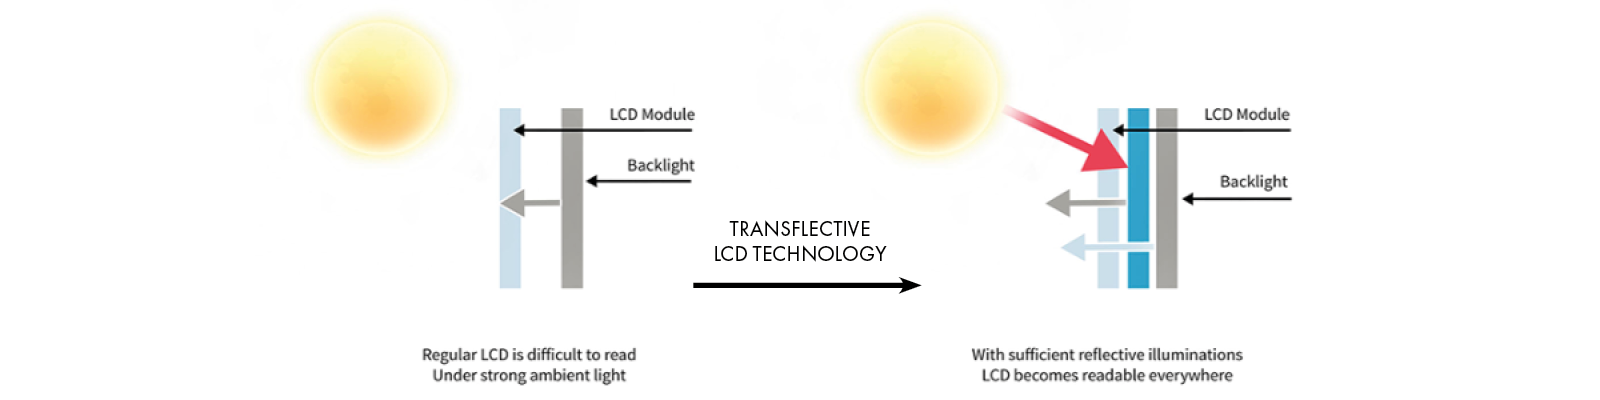 Transflective LCD